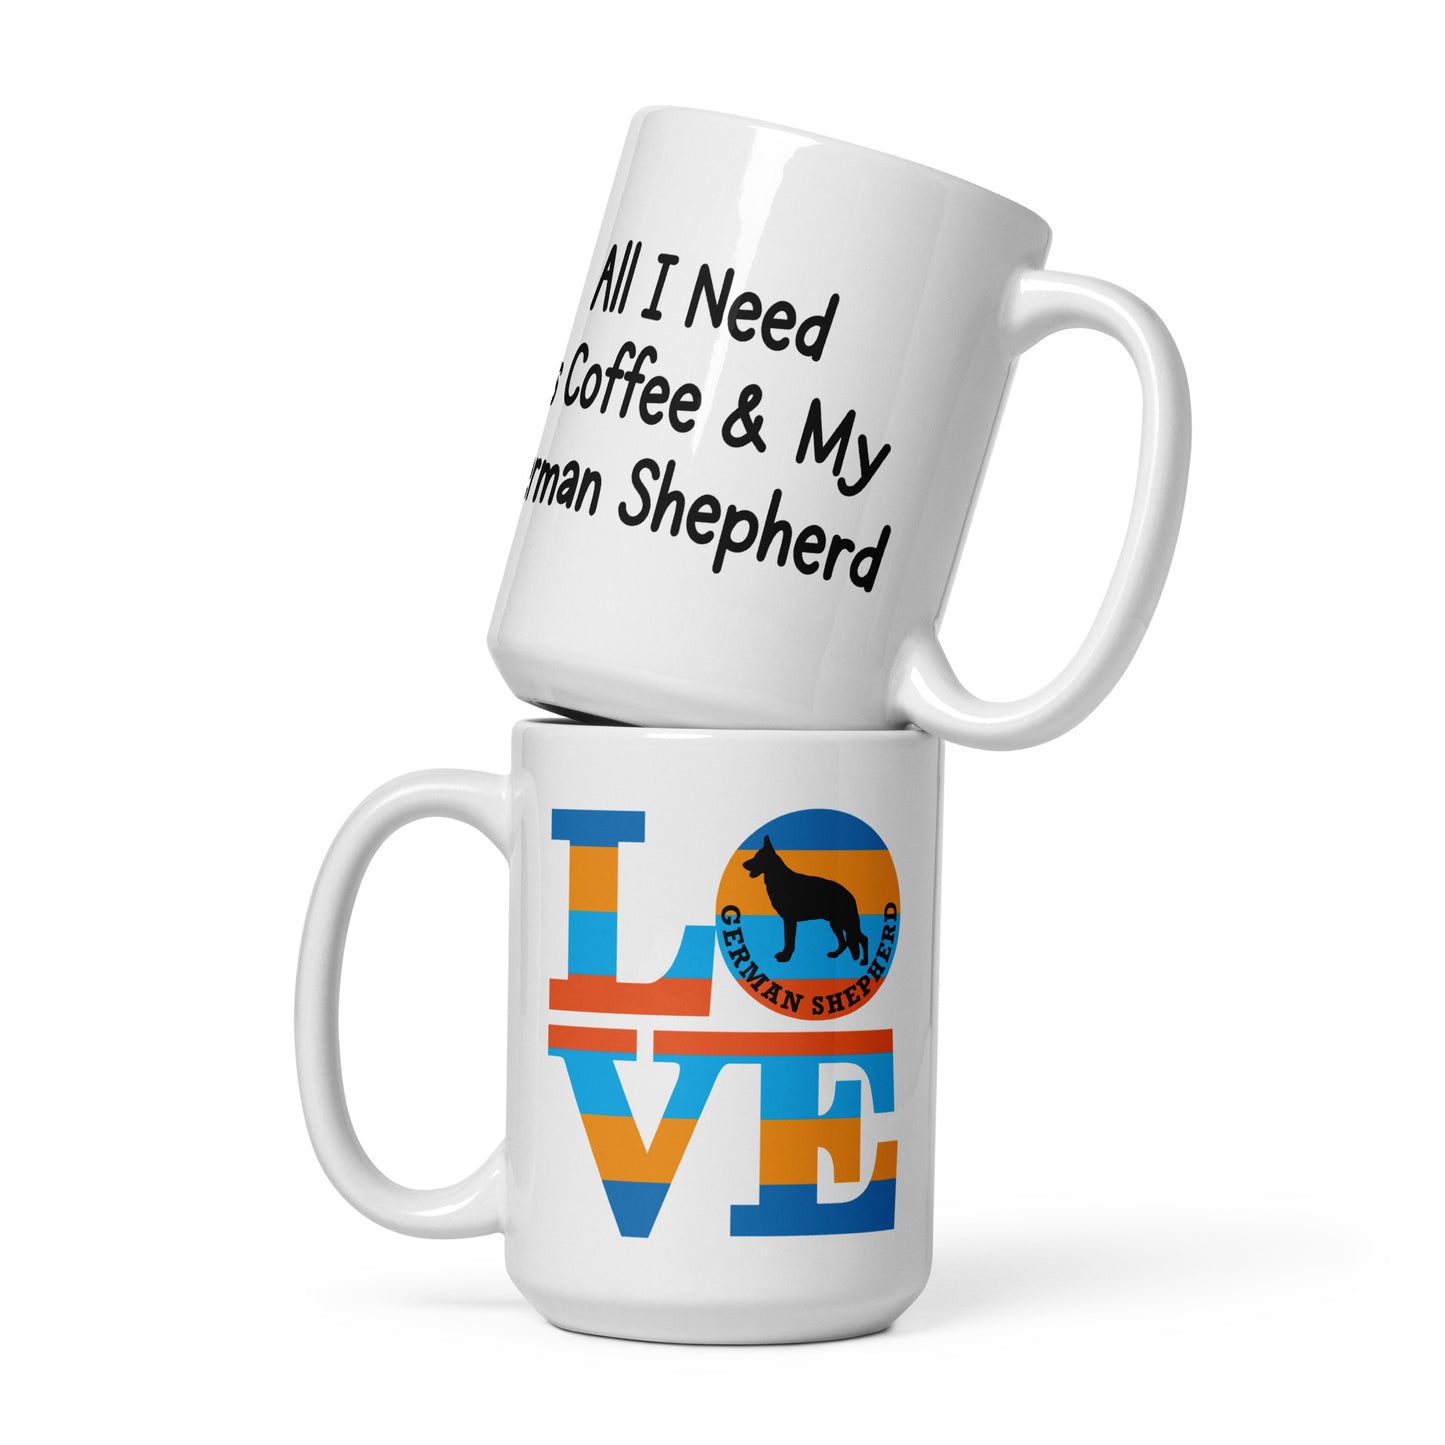 All I need is coffee & my German Shepherd mug by Dog Artistry.